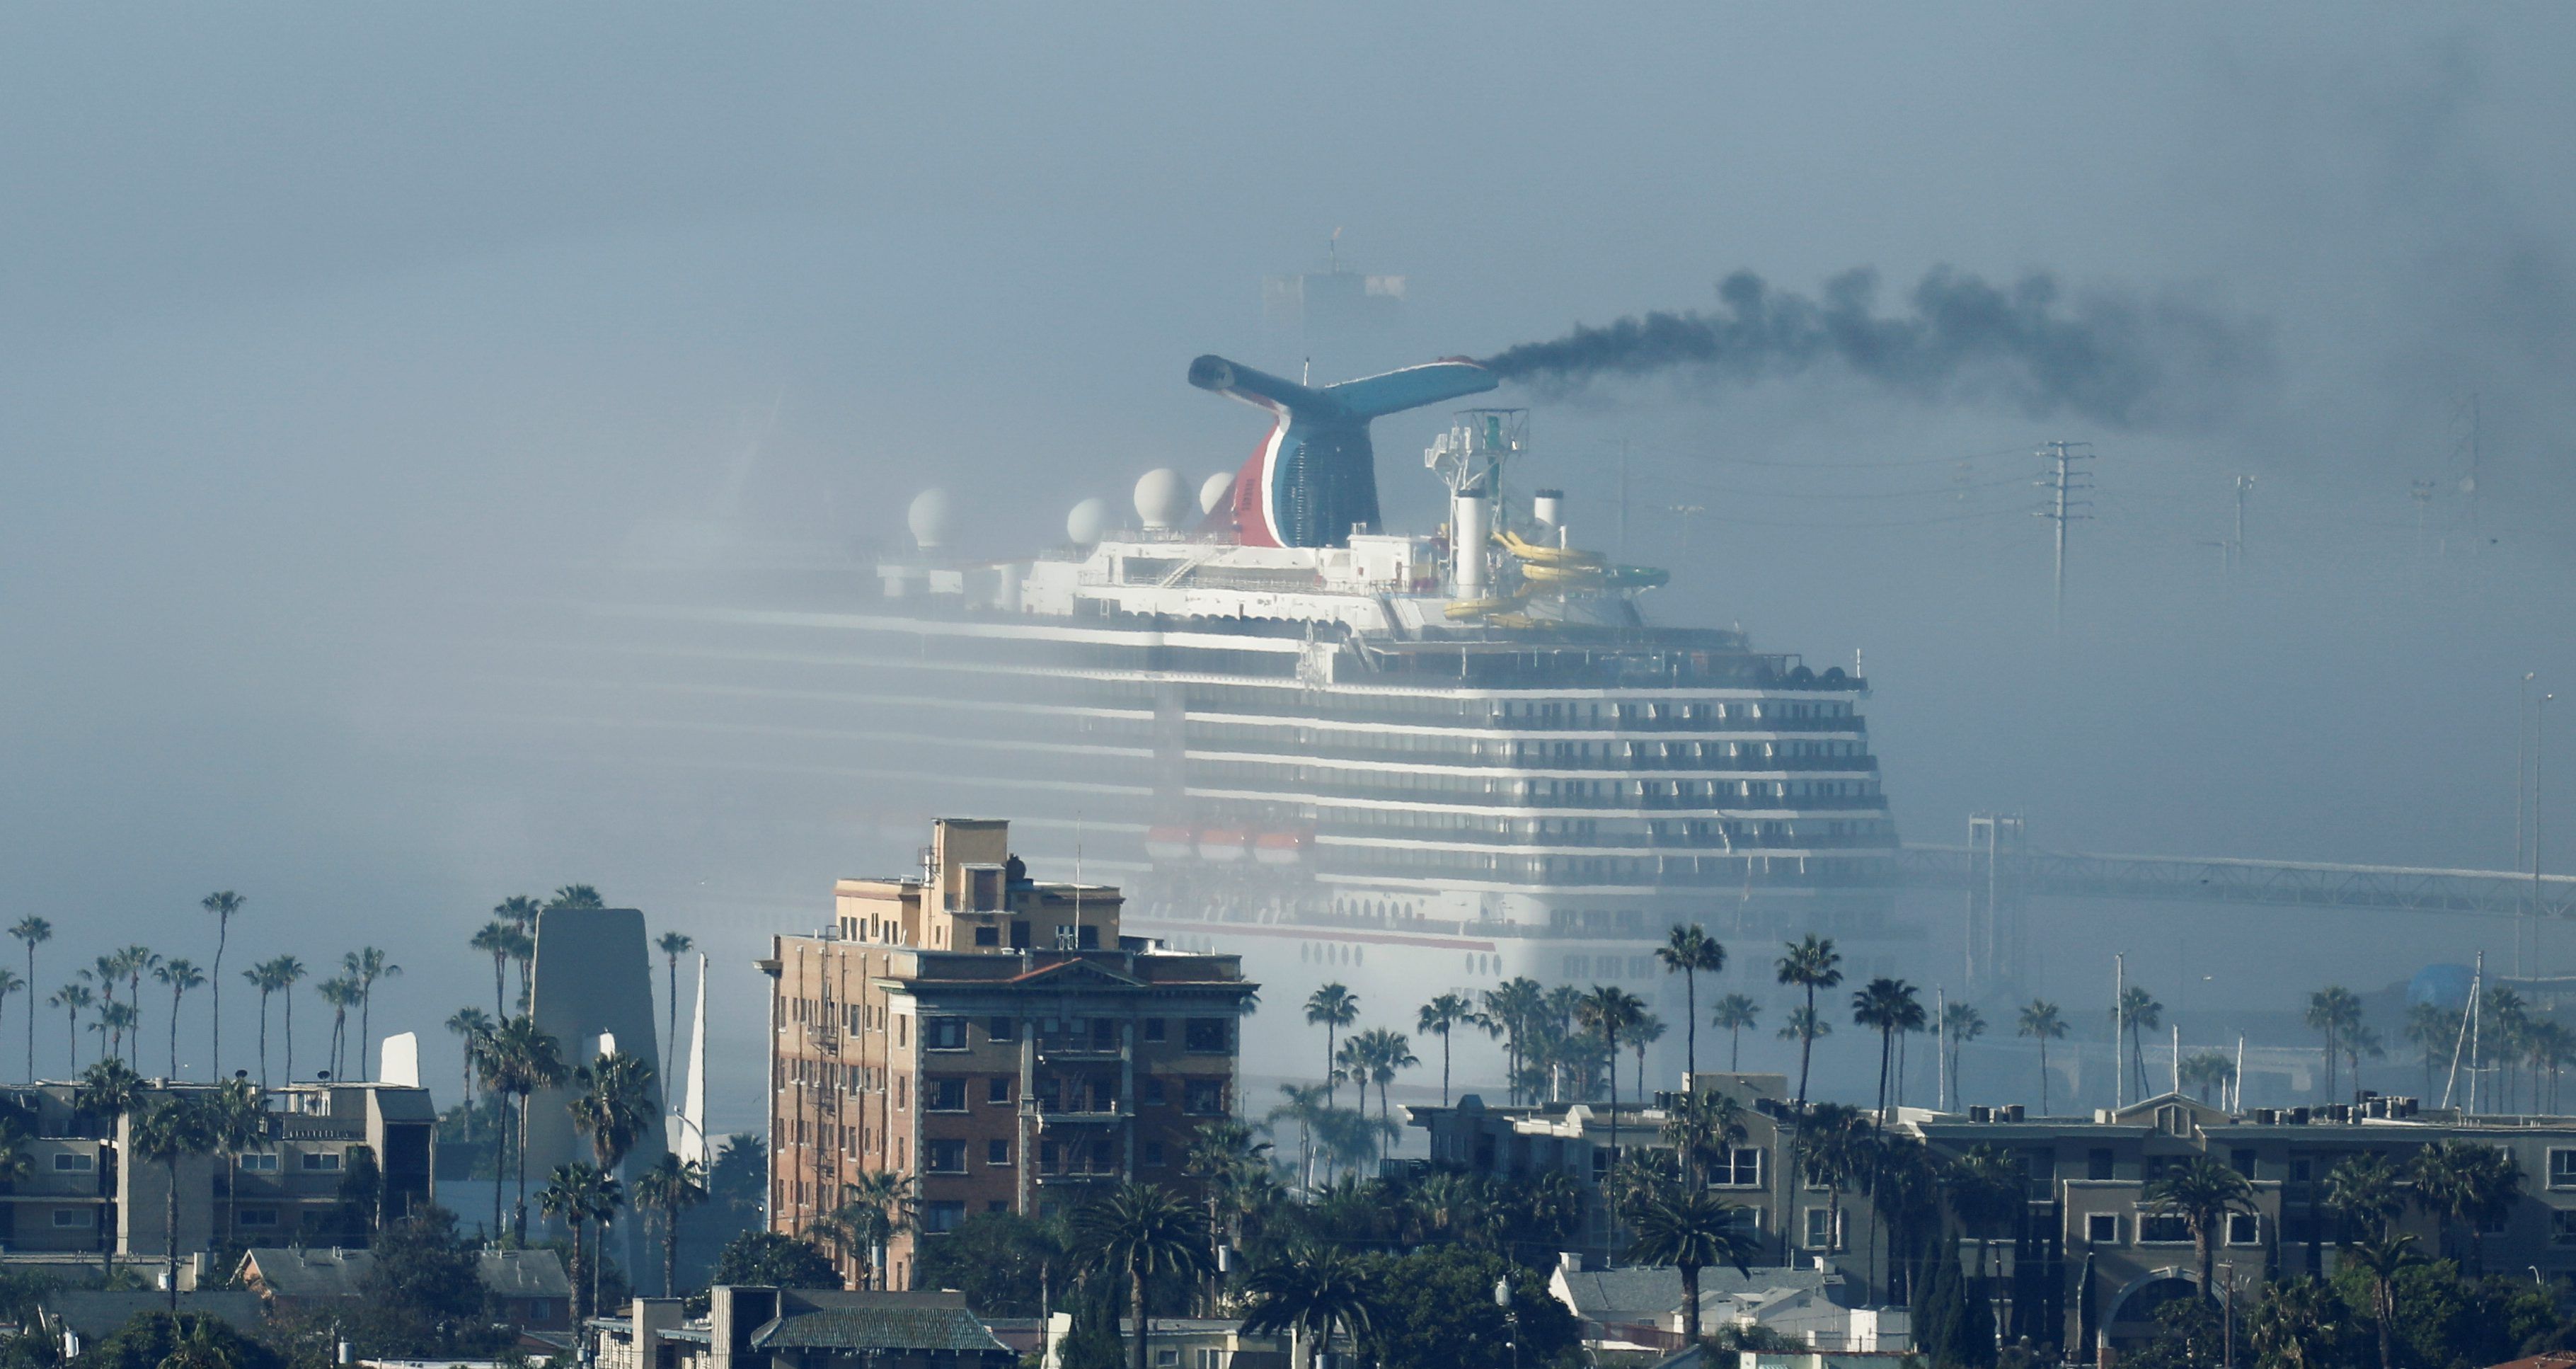 Passengers are already flocking back to cruise ships